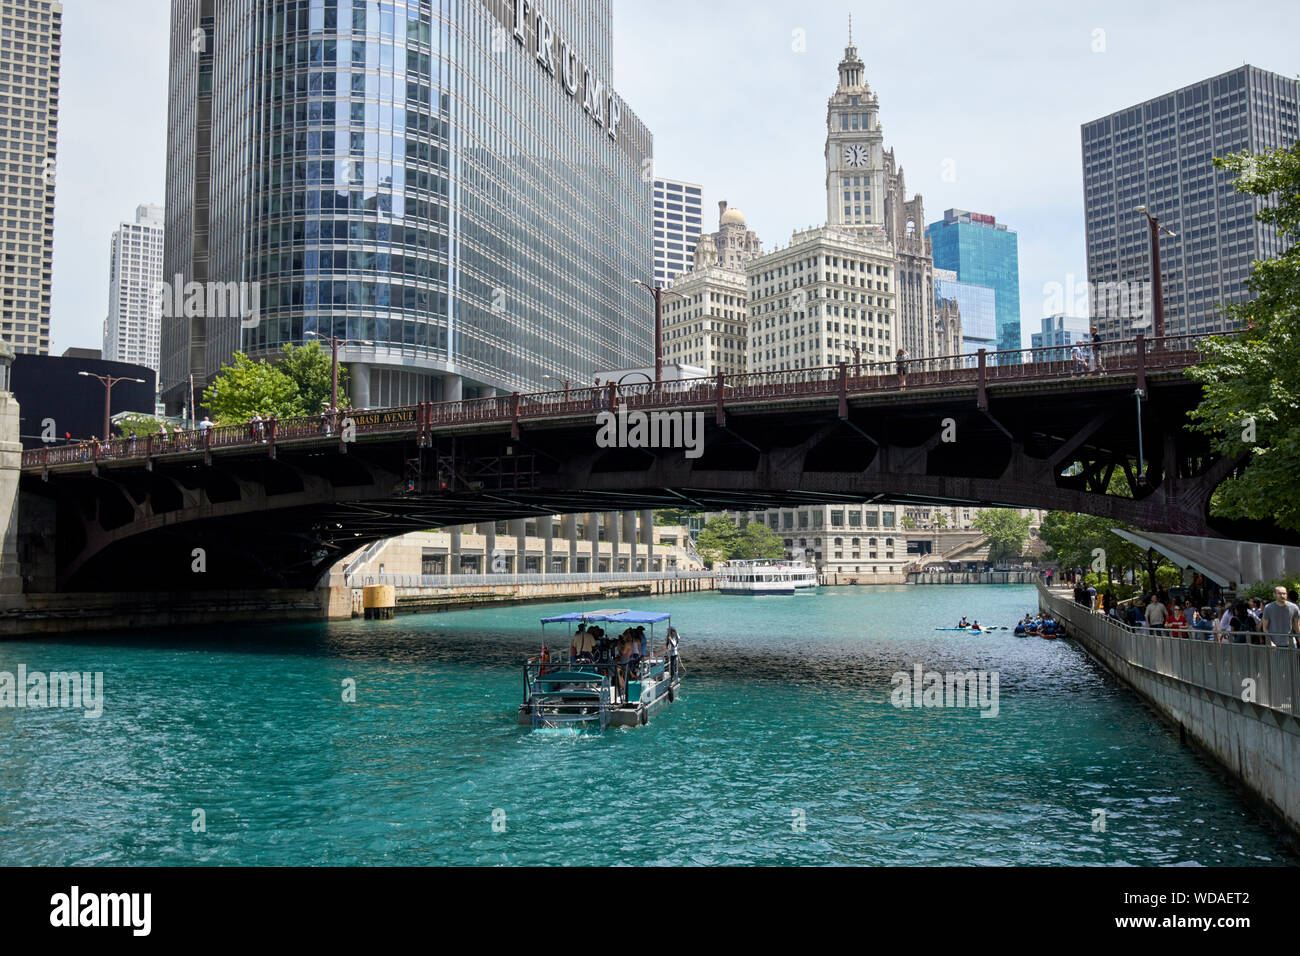 wabash avenue irv kupcinet bridge over the chicago river chicago illinois united states of america Stock Photo